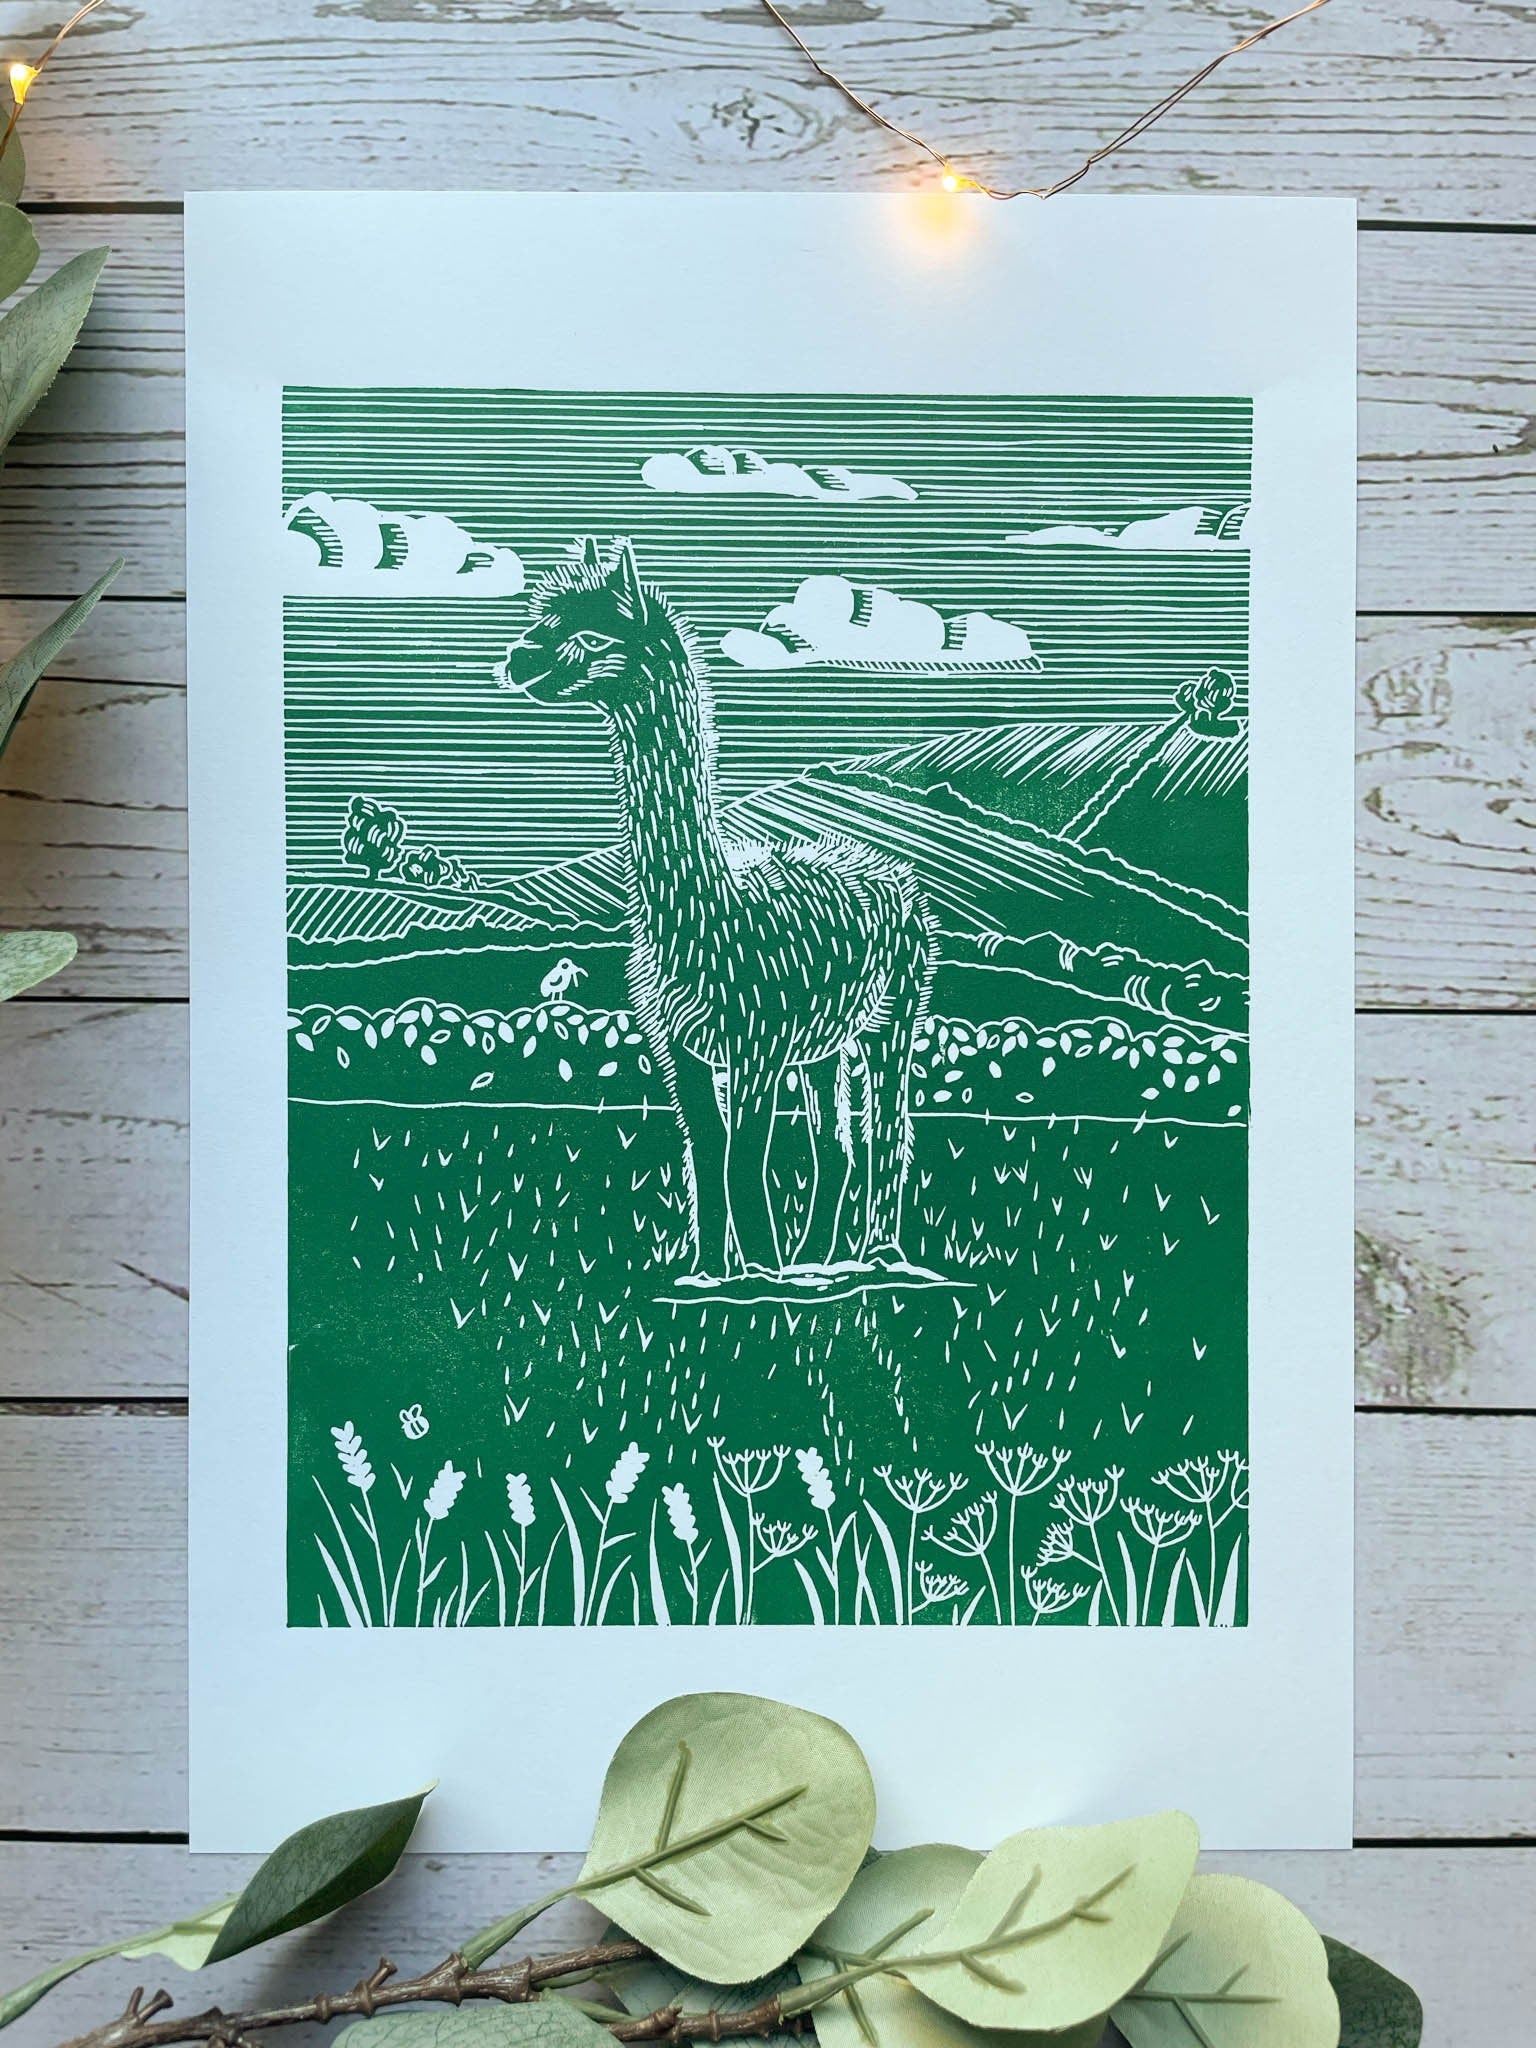 A green A4 lino print of a llama in a field